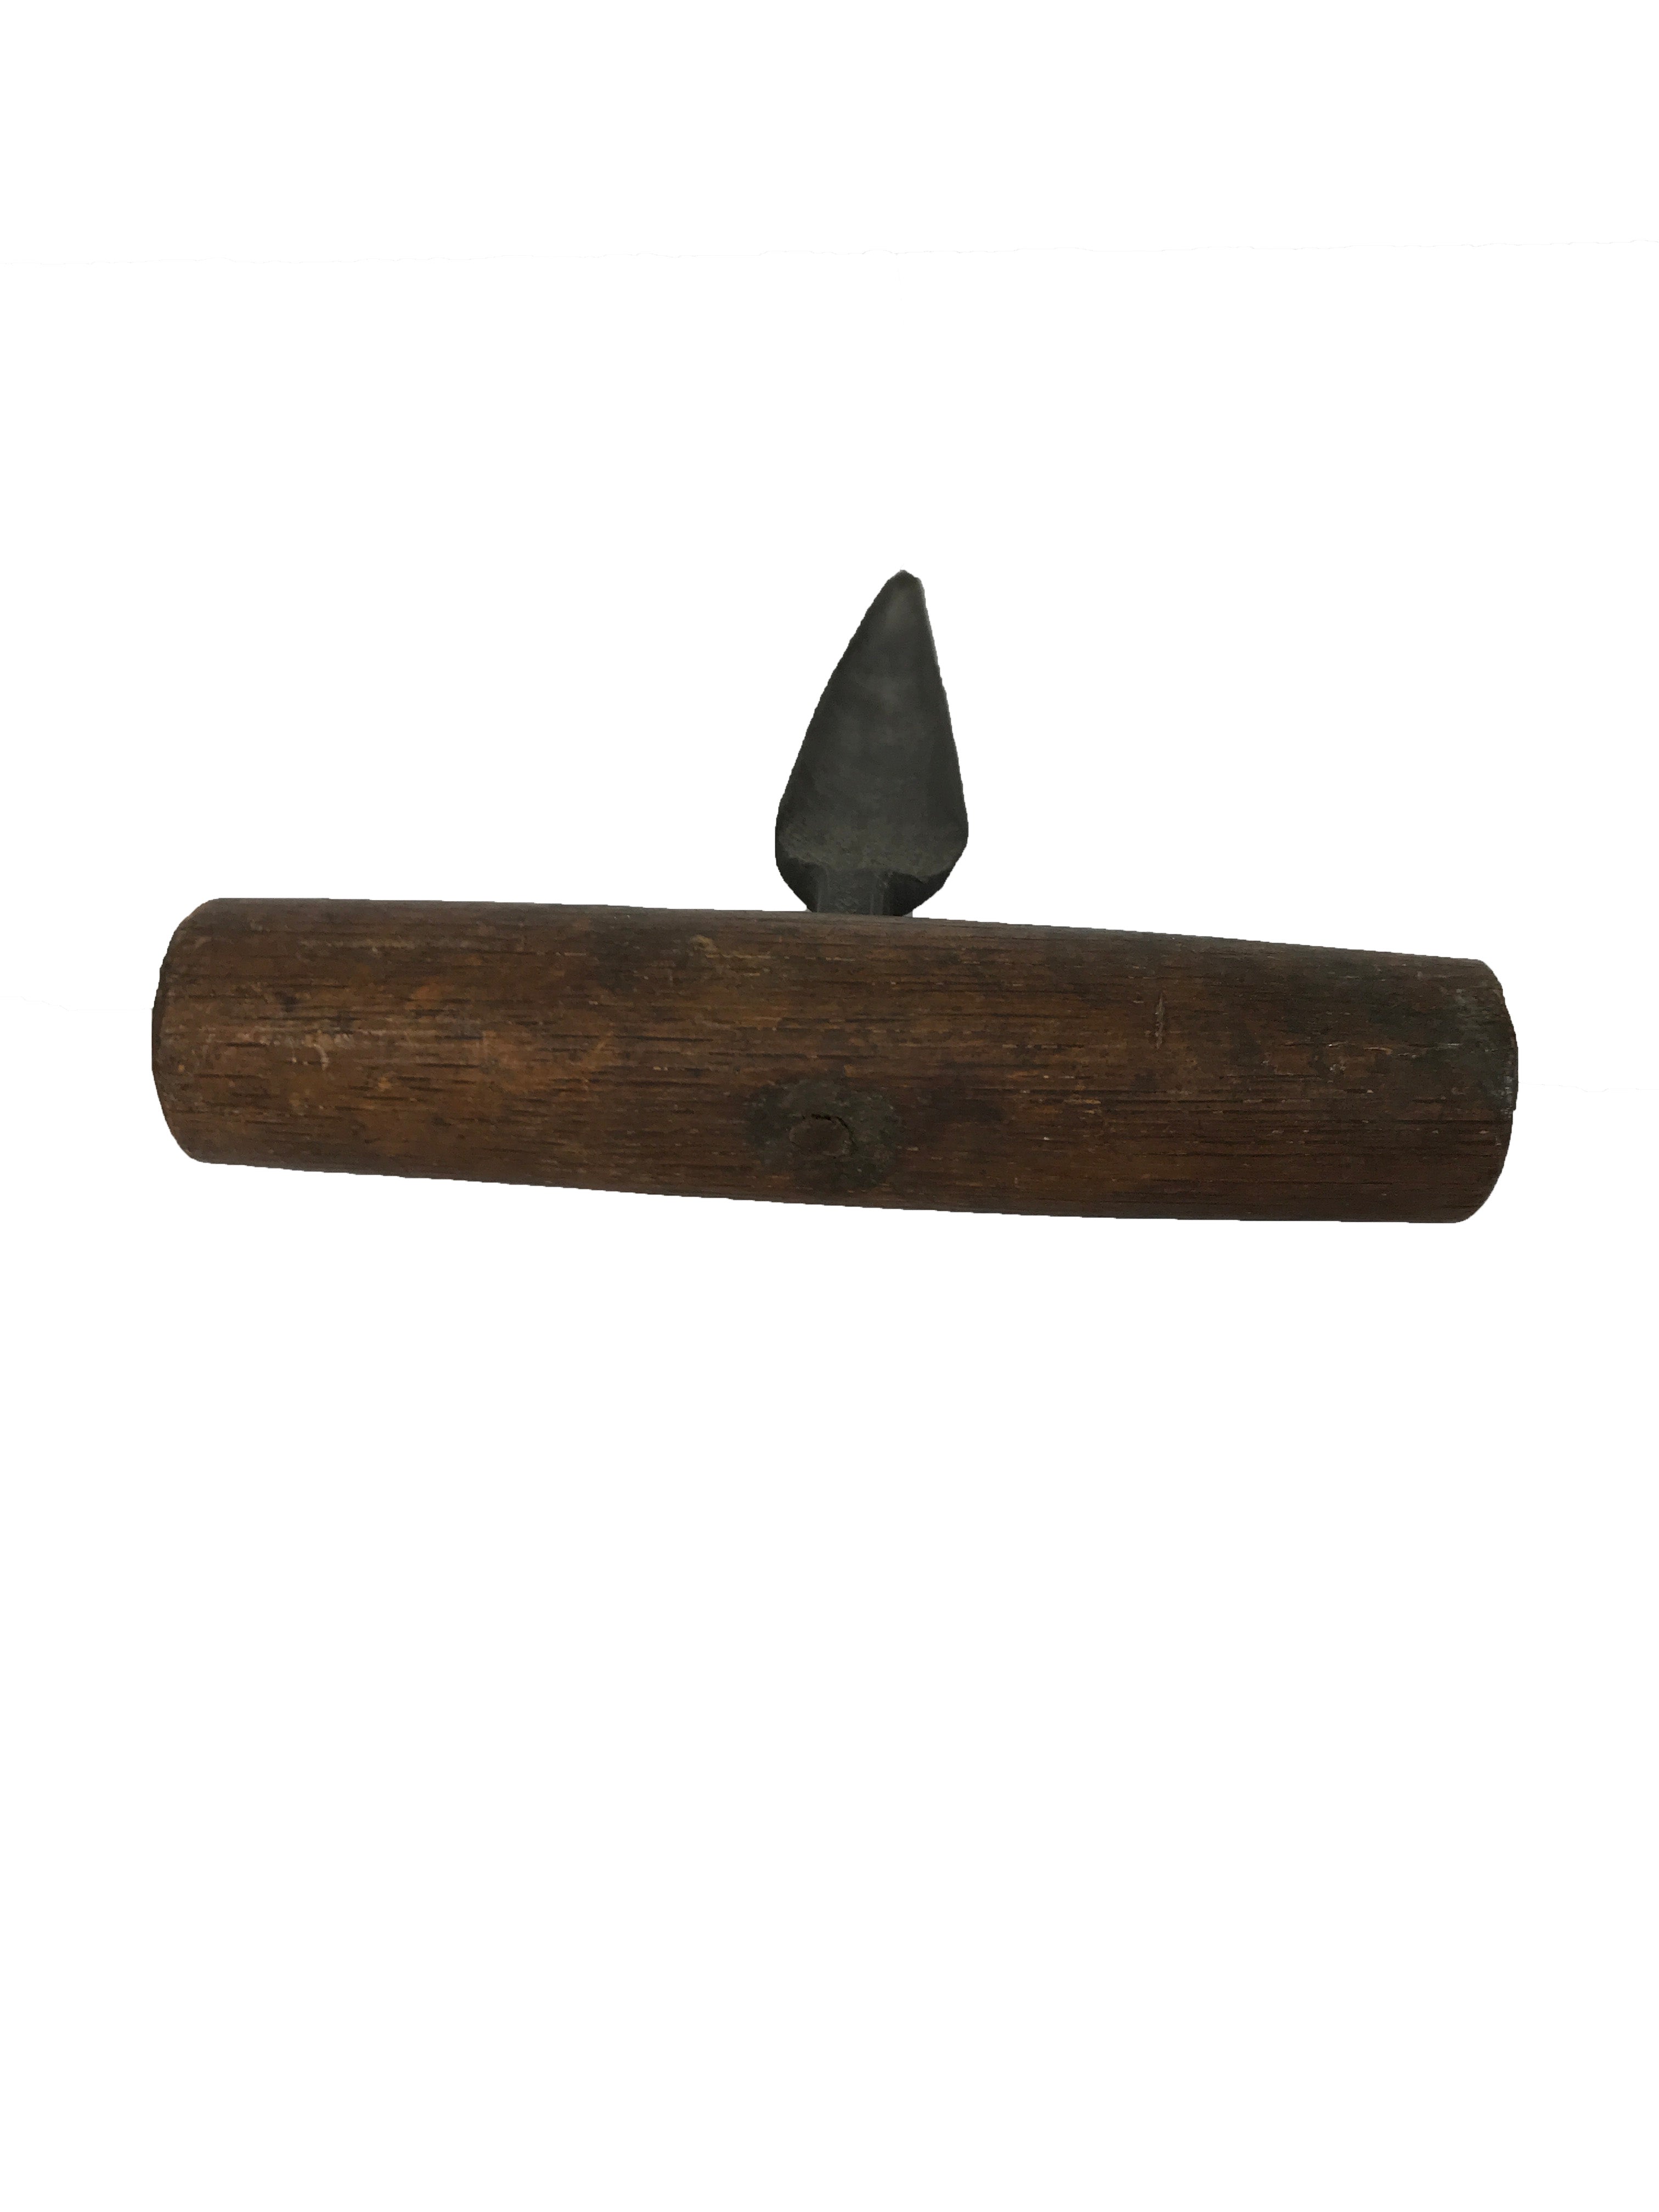 Antique Barrel Reamer Cooper's Tool with Wood Handle & Steel Tap